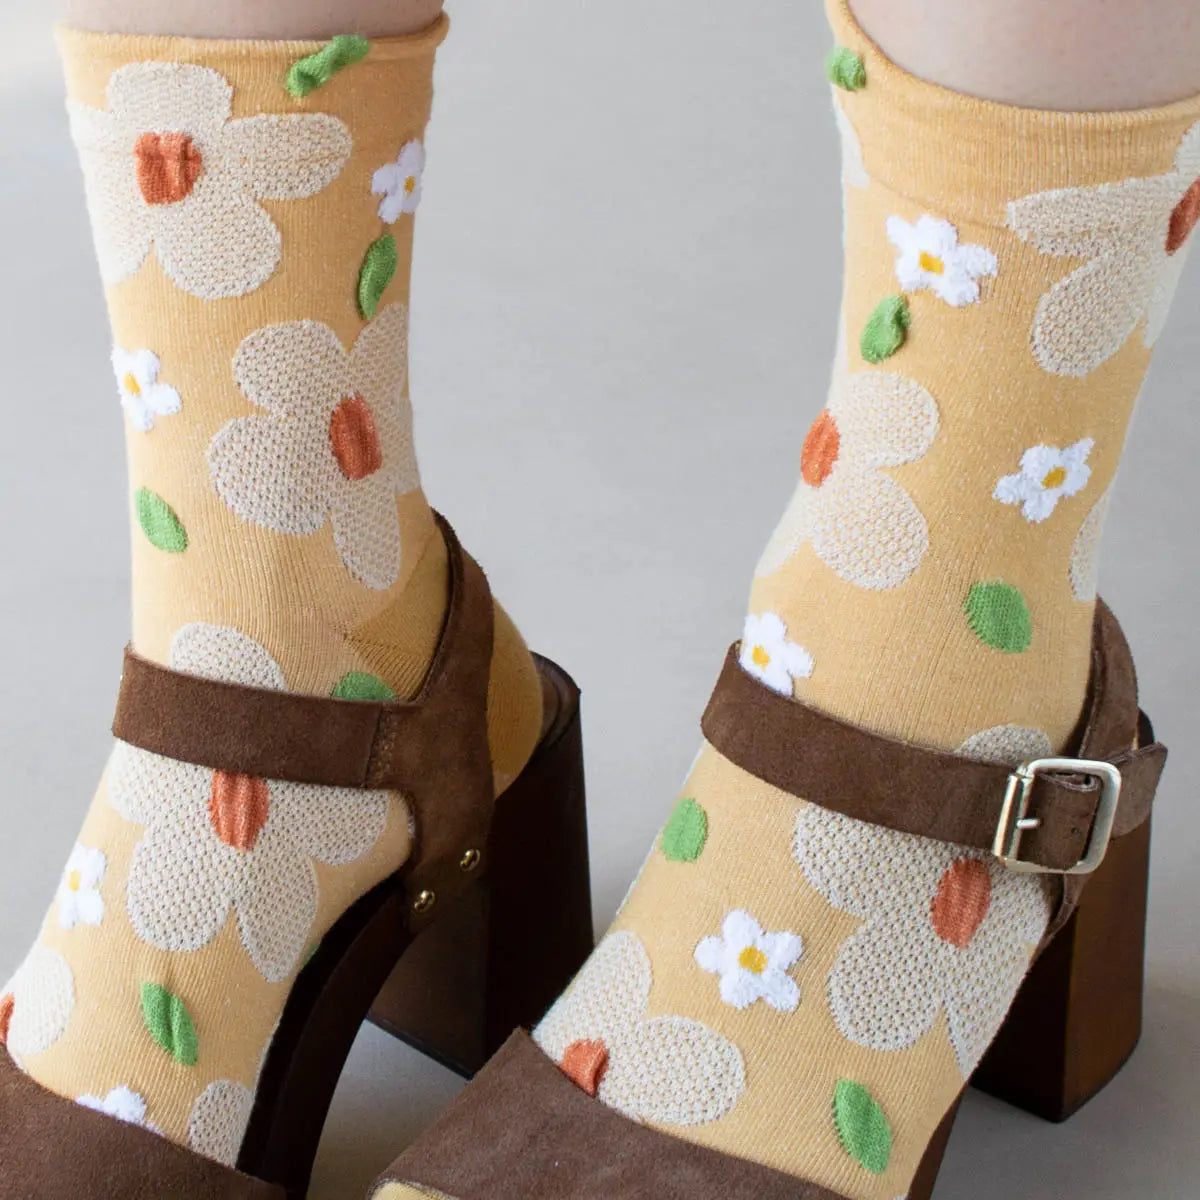 Textured Daisy Socks - Proper